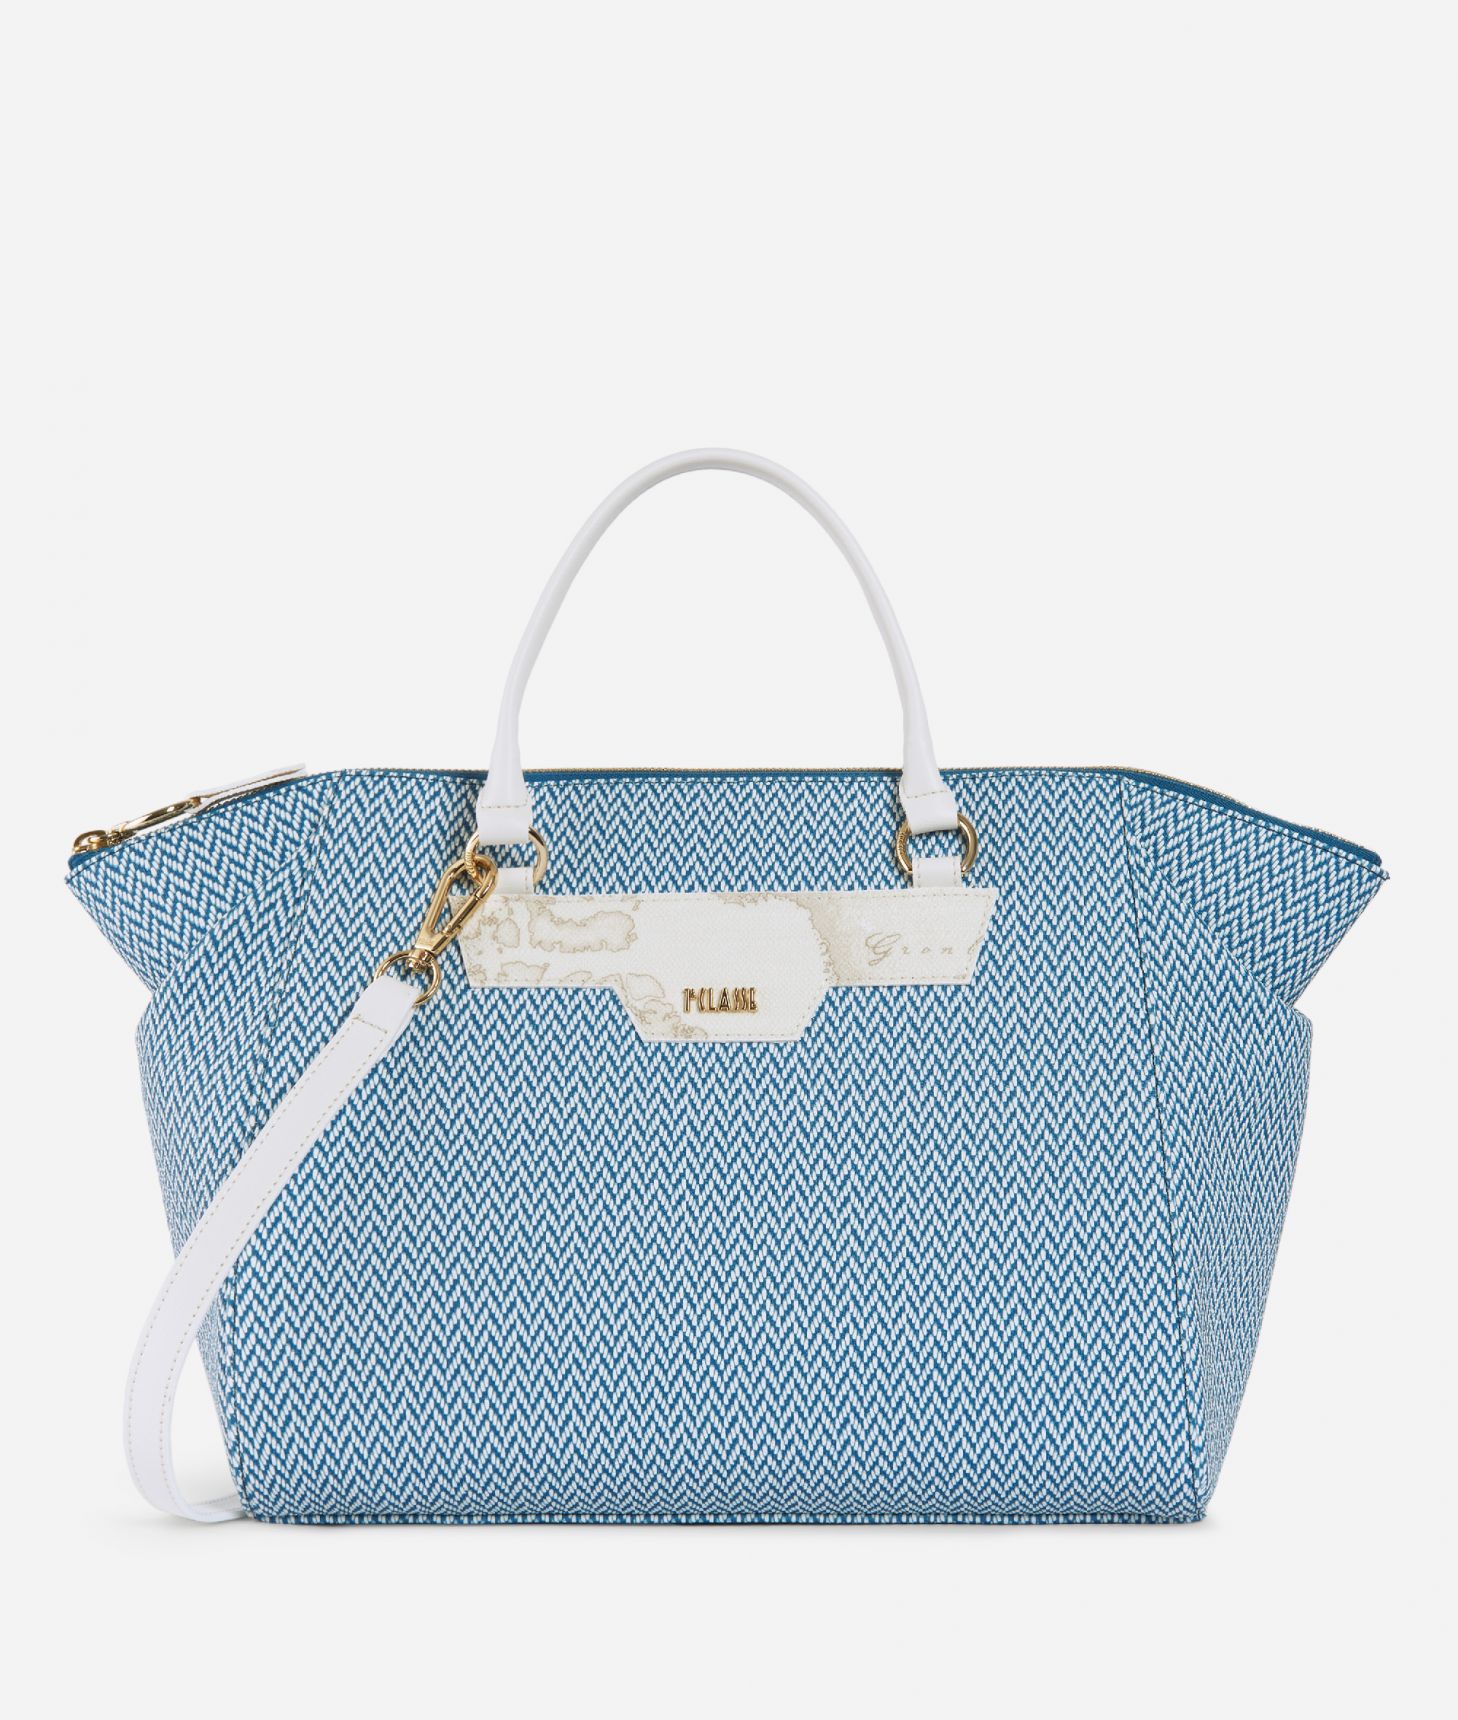 Tropea medium Handbag Tyrrhenian Blue,front